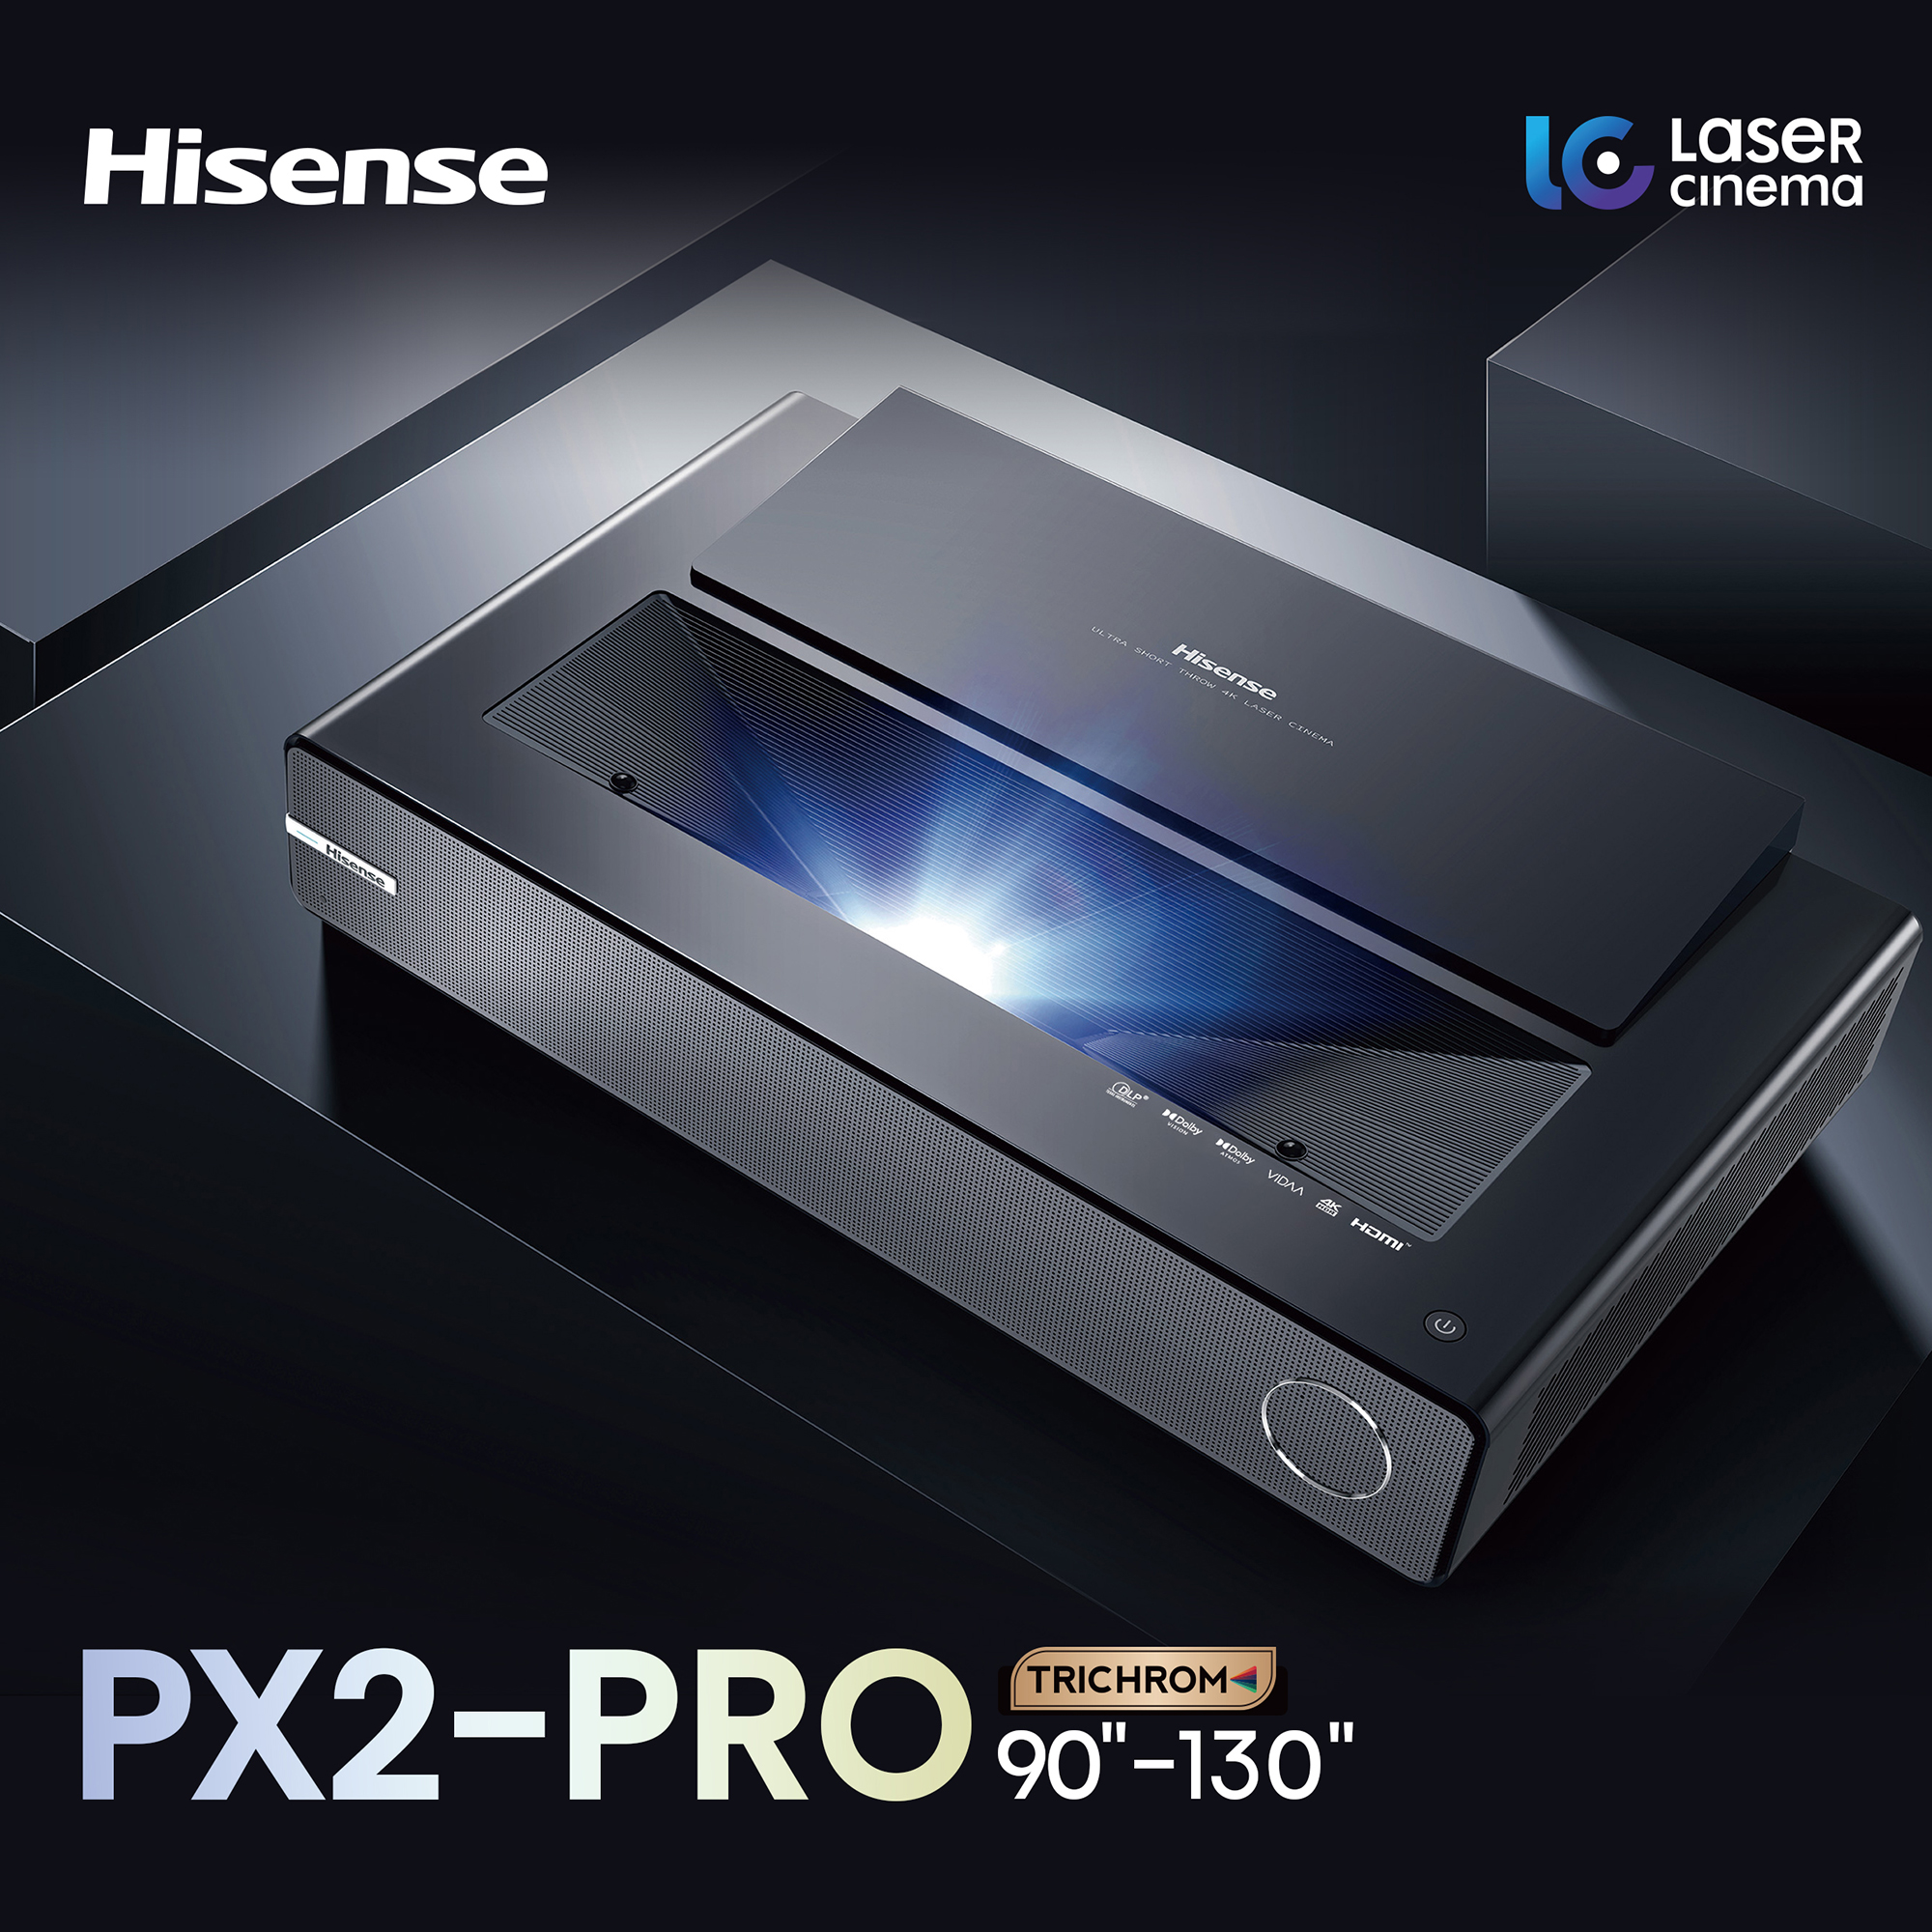 Hisense - Laser Cinema PX2-PRO